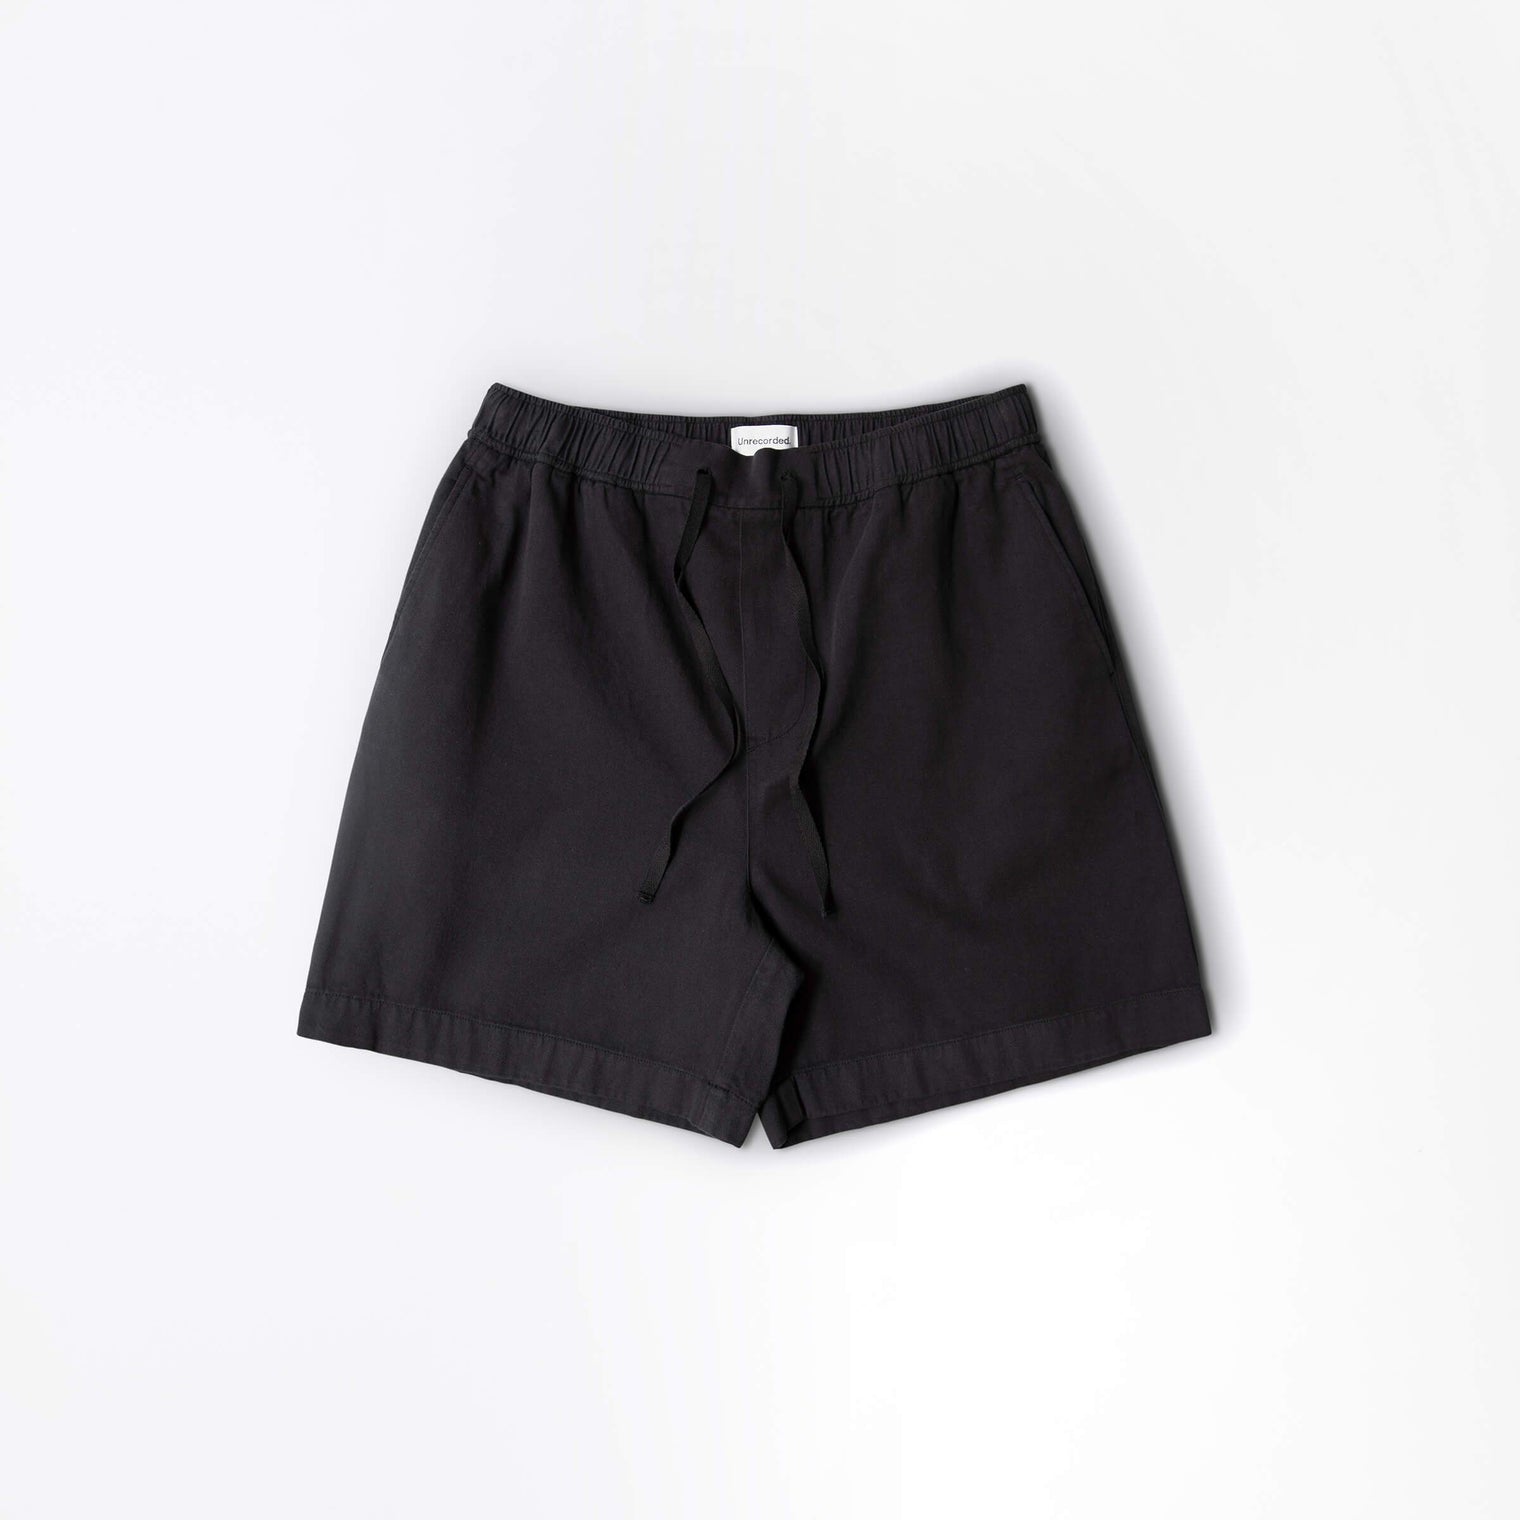 Drawstring Shorts (variants without media)